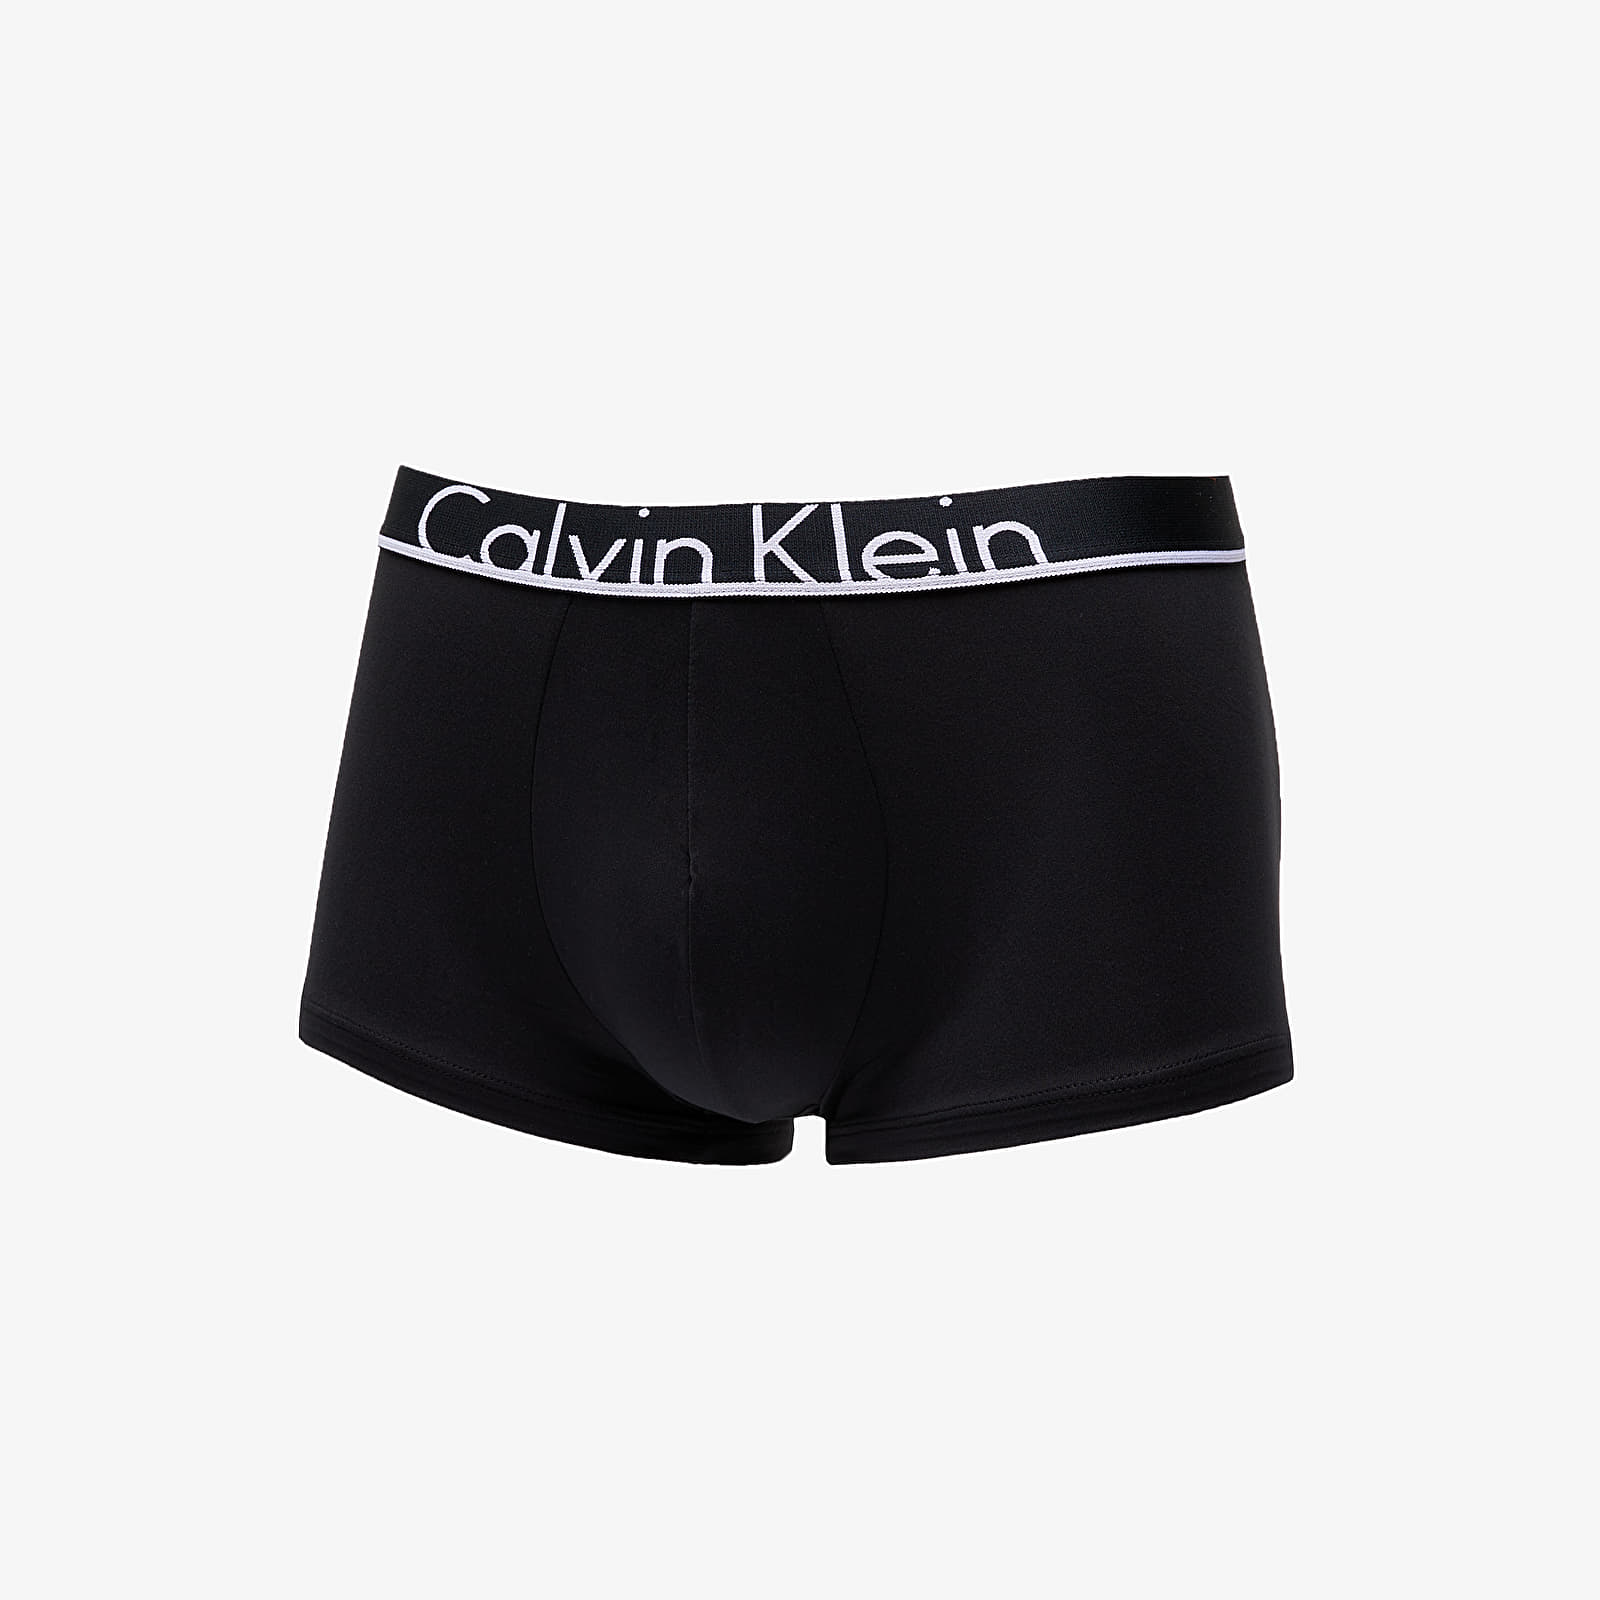 Boxer Calvin Klein Low Rise Trunk Black